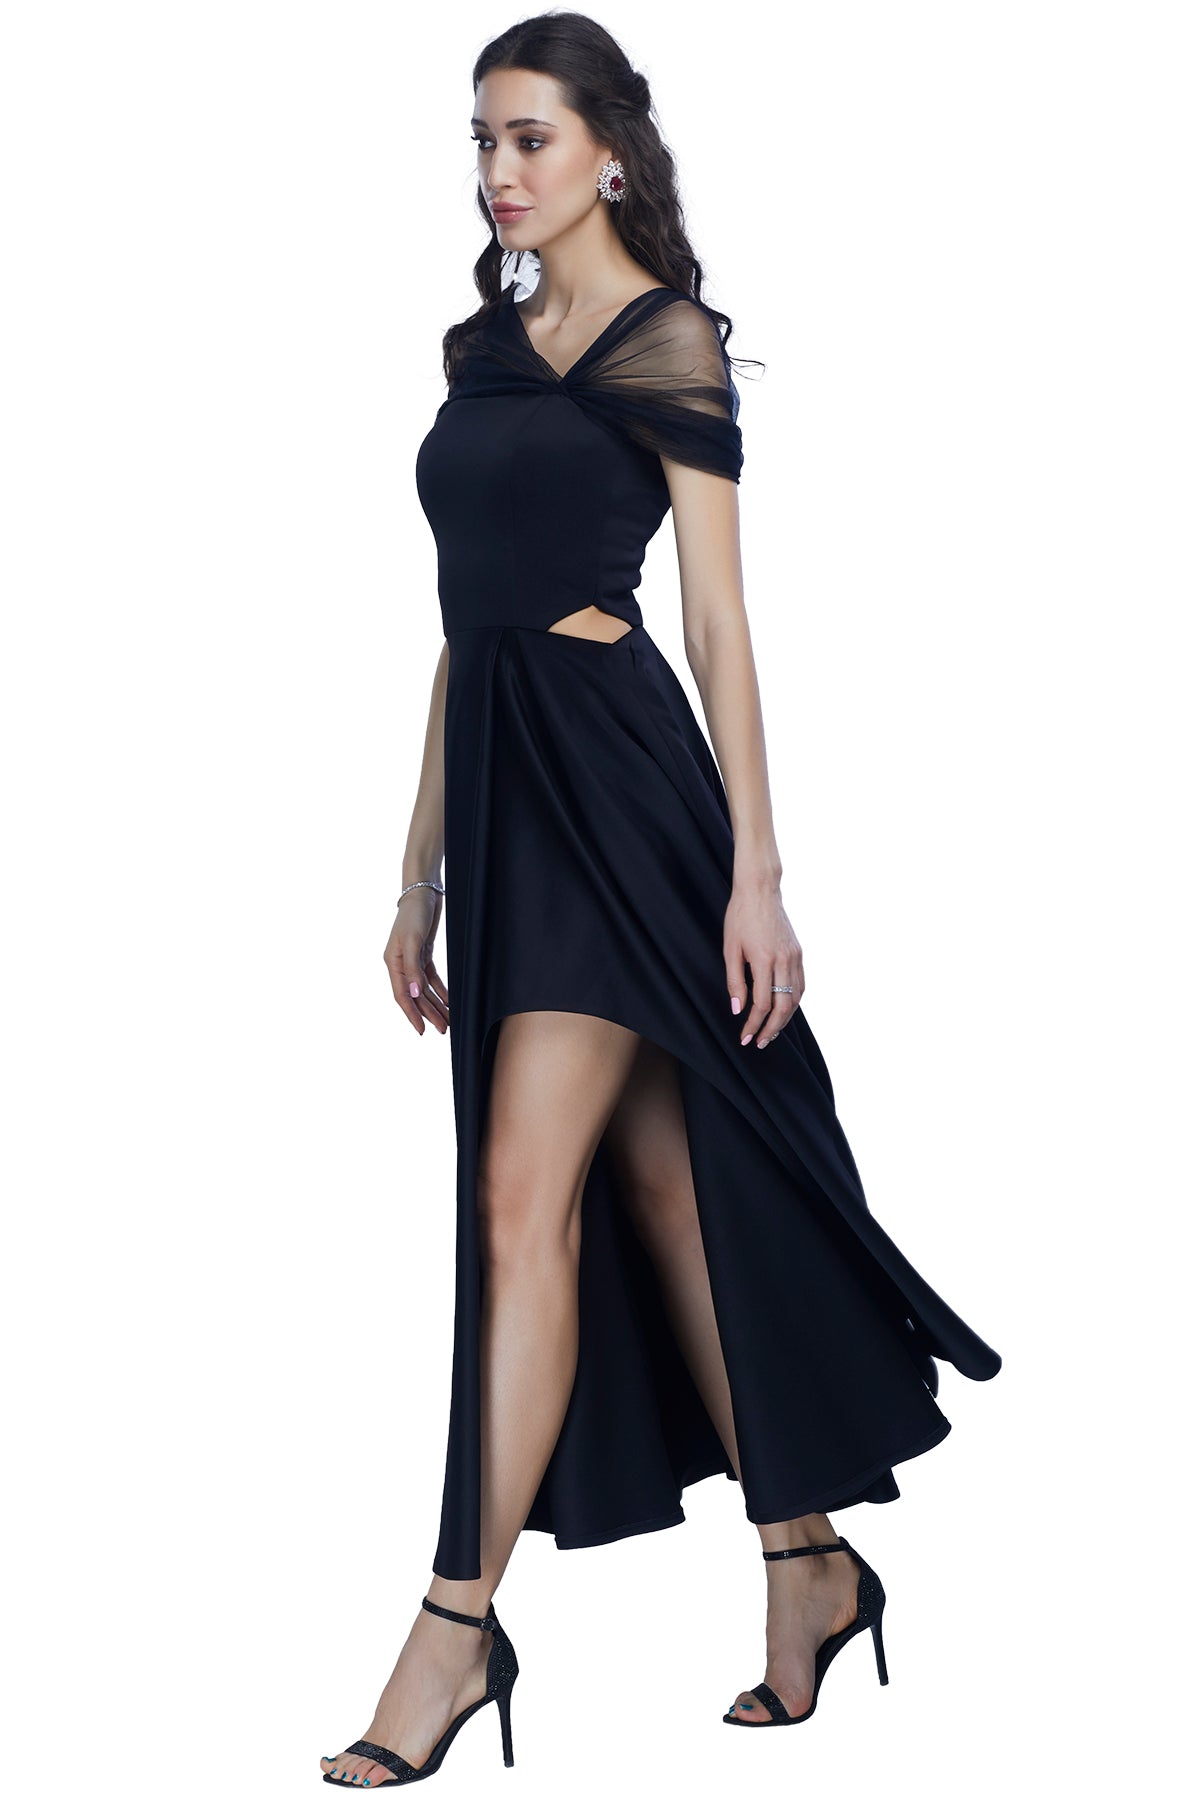 Black high slit gown